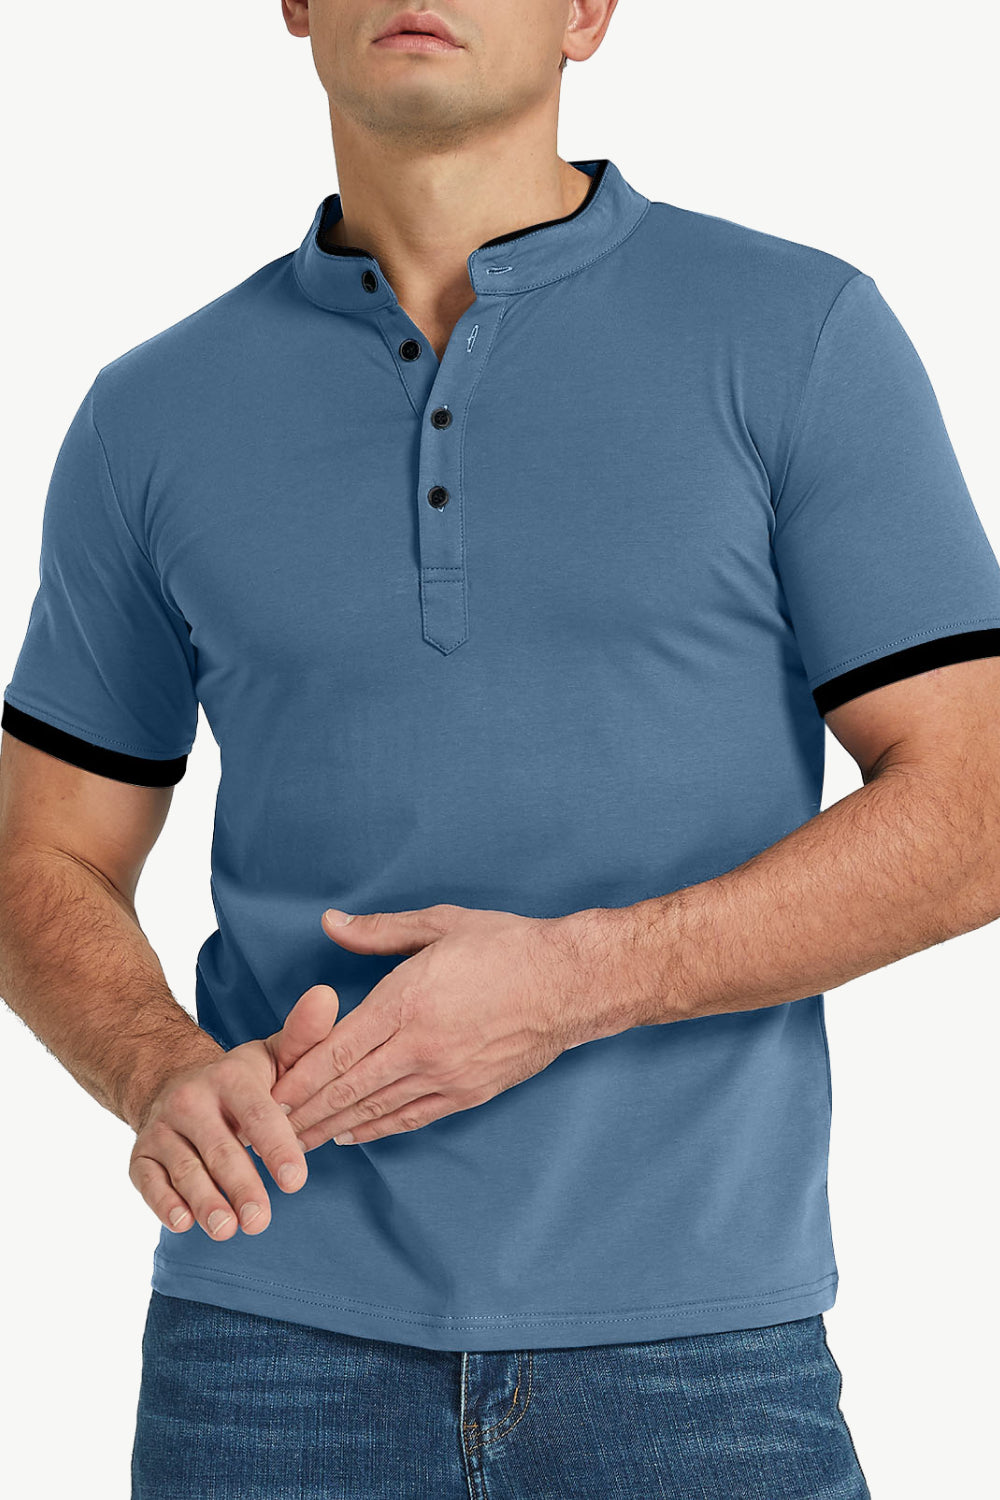 Contrast Short Sleeve Tee Shirt